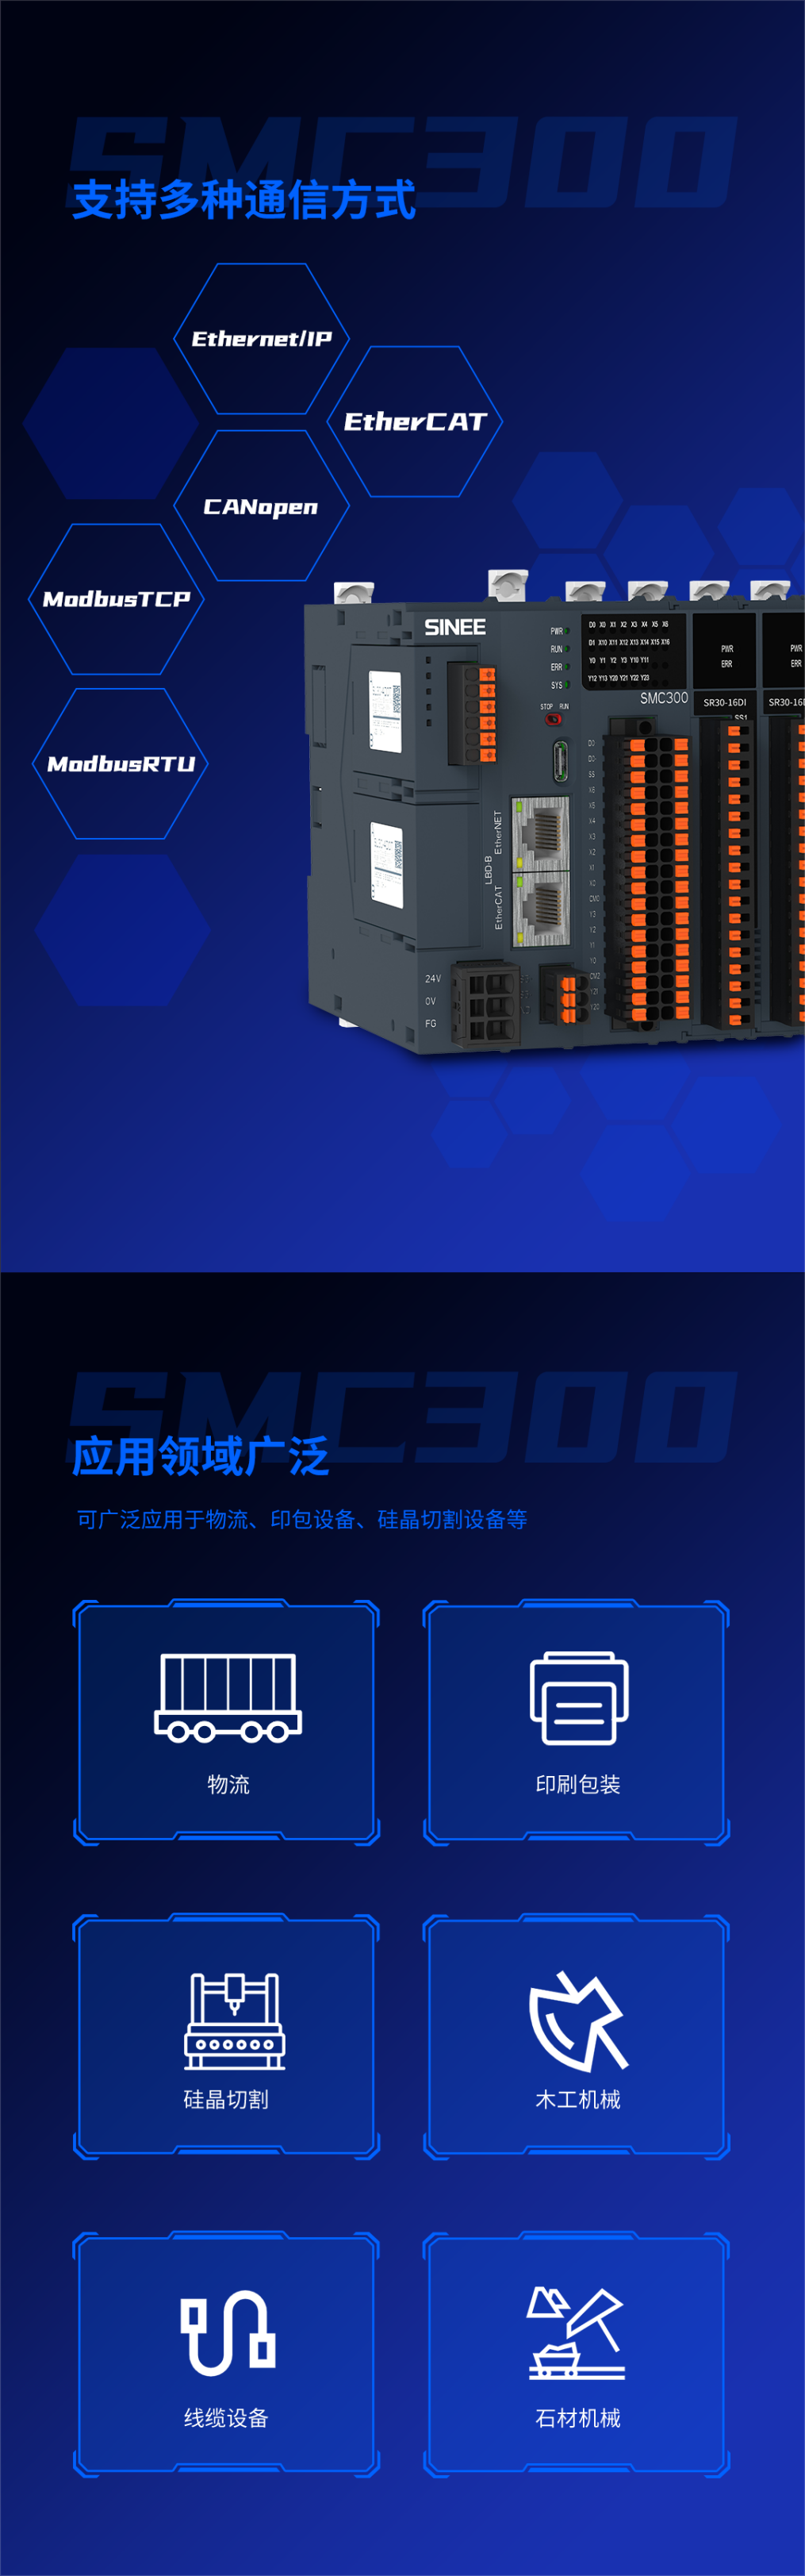 SMC300长图7.28(4.png